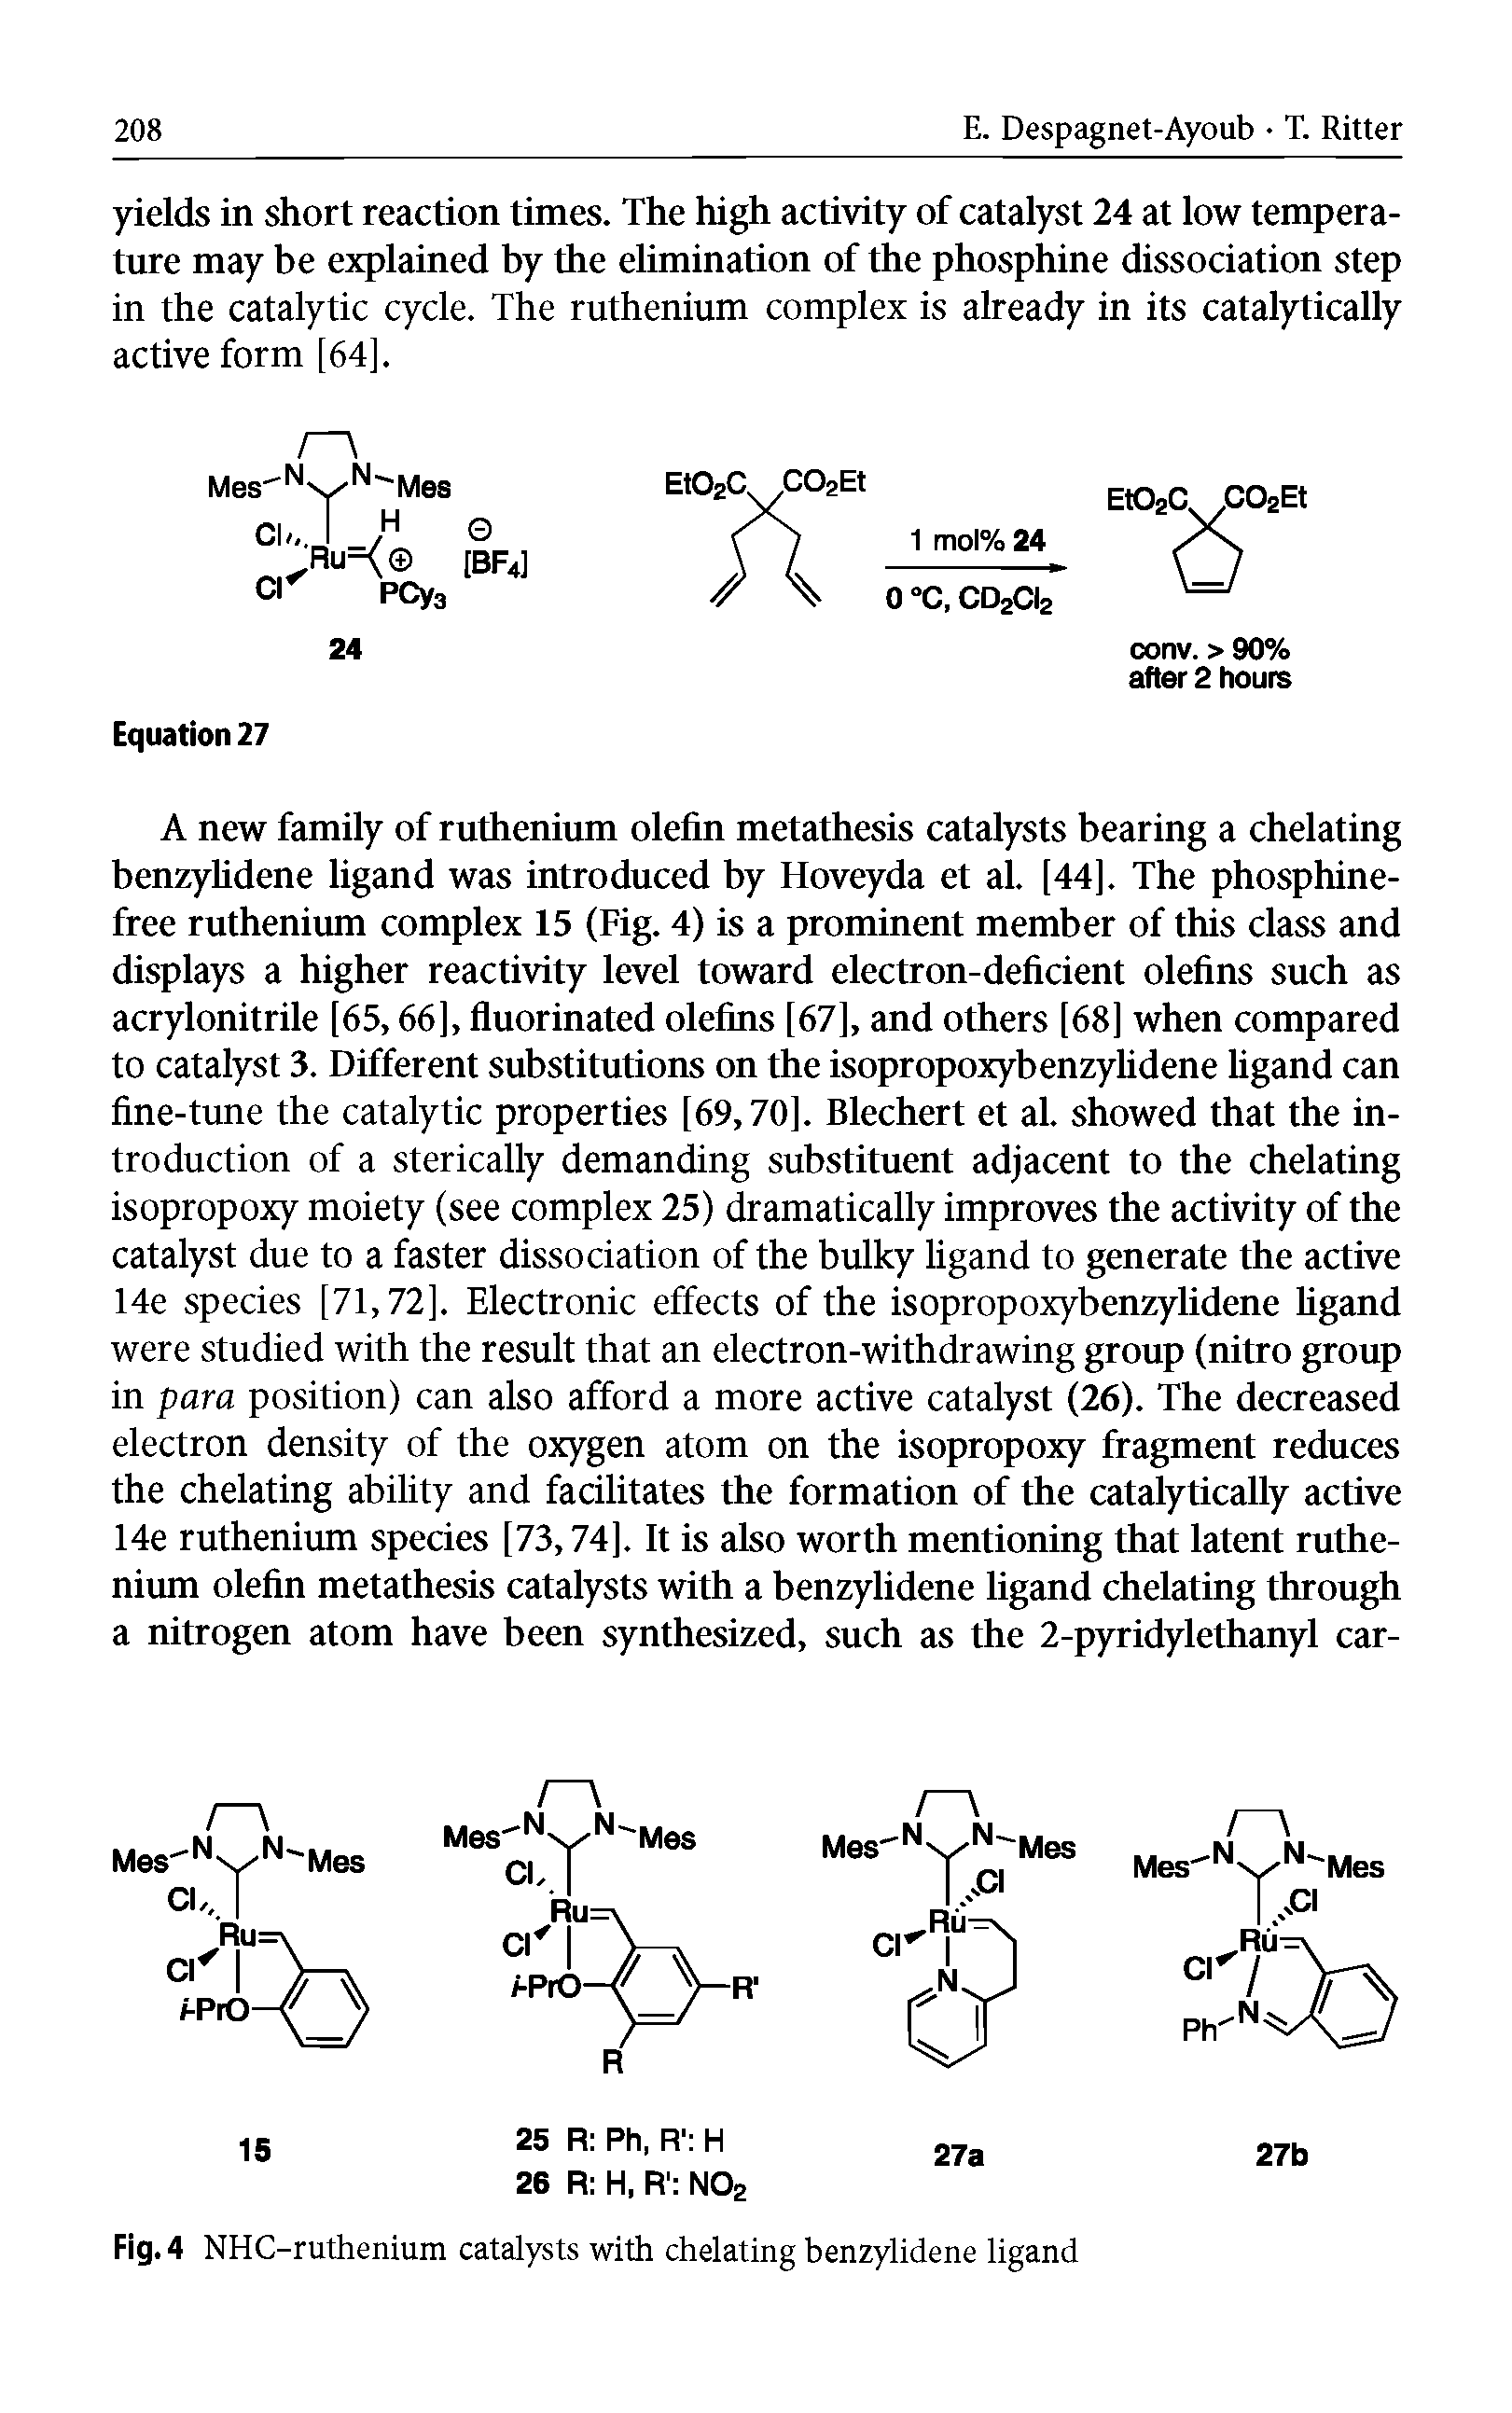 Fig. 4 NHC-ruthenium catalysts with chelating benzylidene ligand...